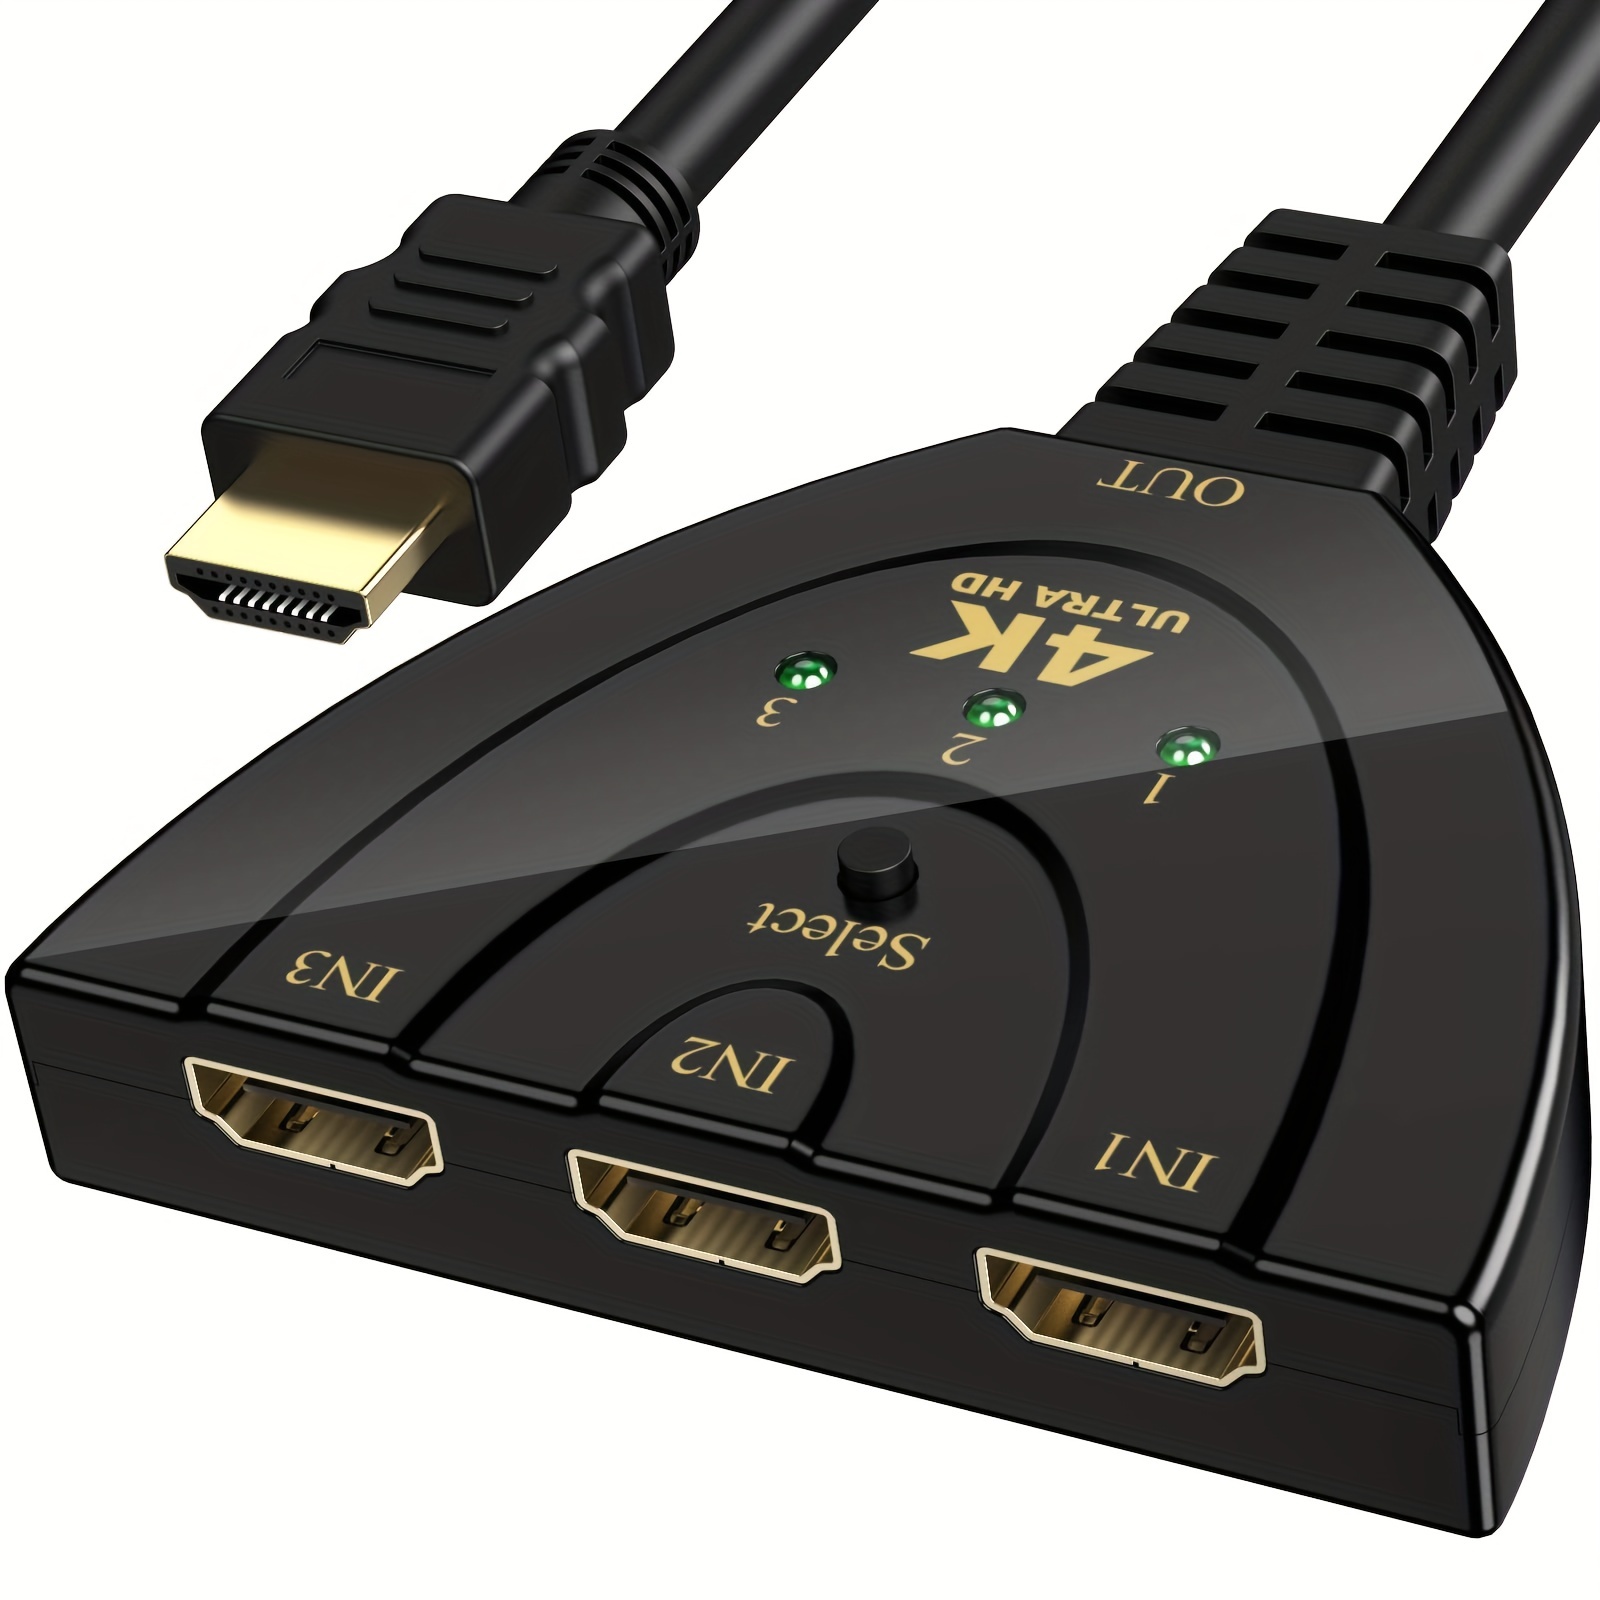 Splitter HDMI 4 way 4K*2K - Audio Video Switch and Splitter - Audio Video